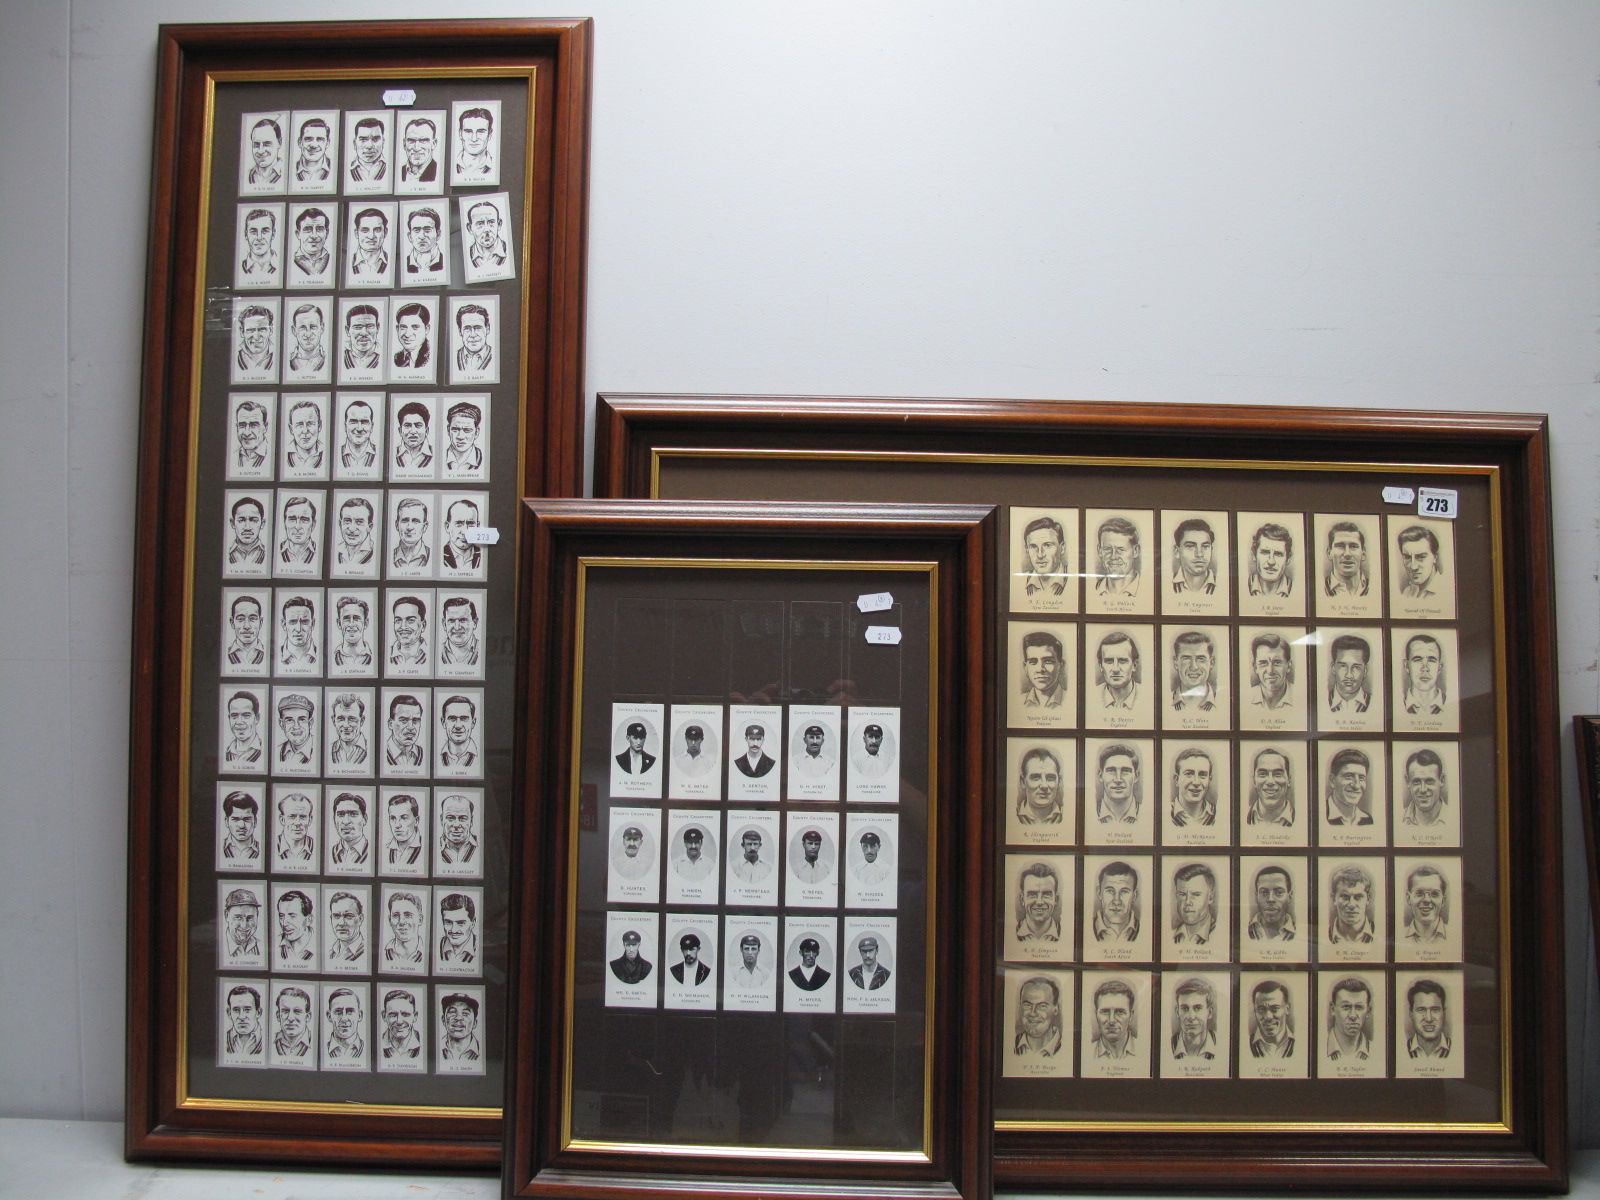 Framed Cricket Themed Cigarette Cards - 1960's Test Cricketers and 1950's Test Cricketers, both sets